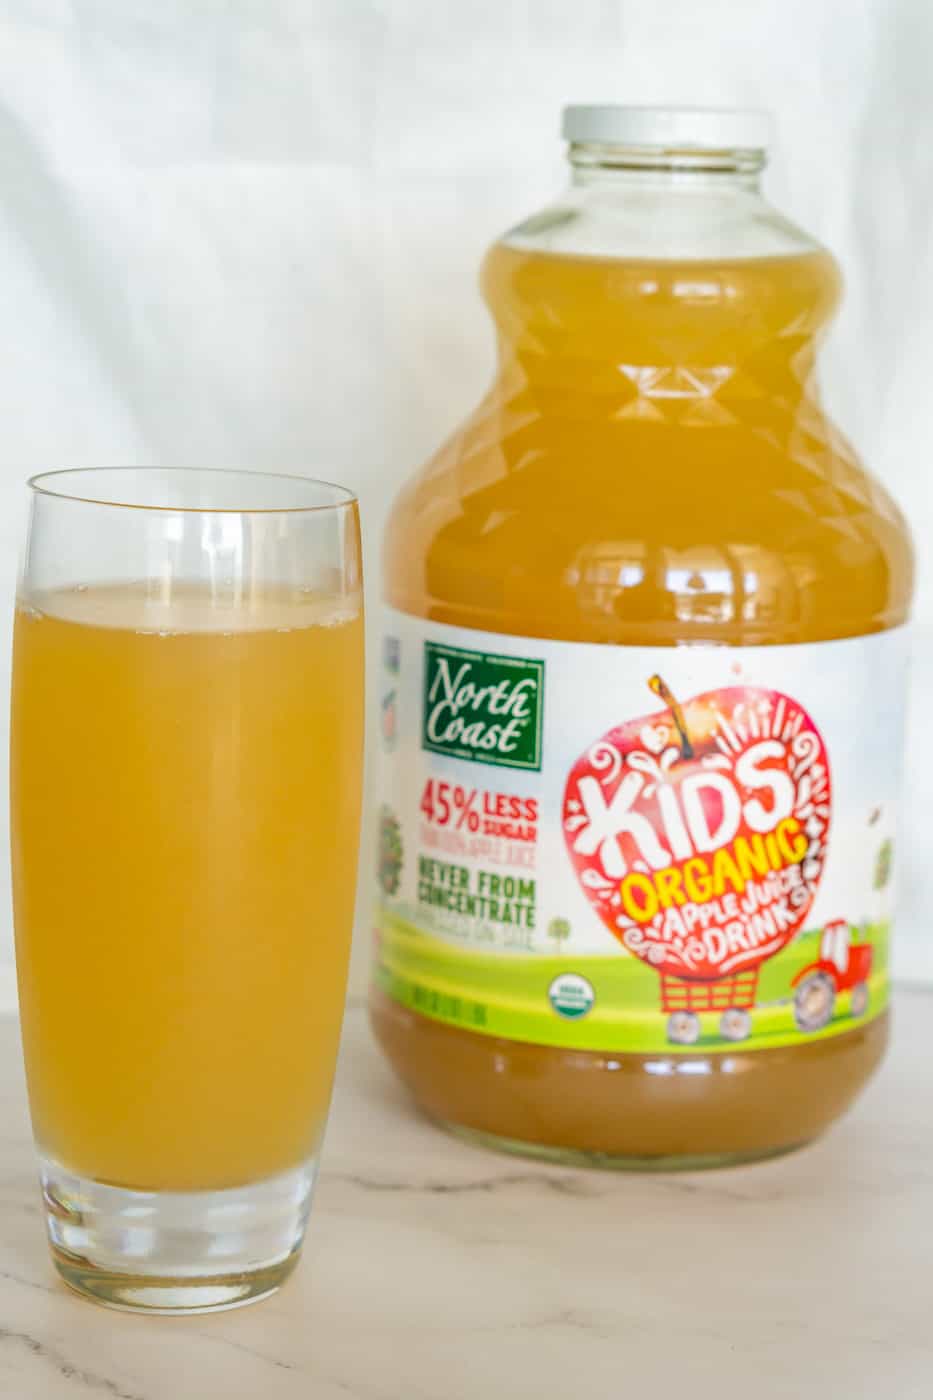 north coast organic apple juice drink in a bottle